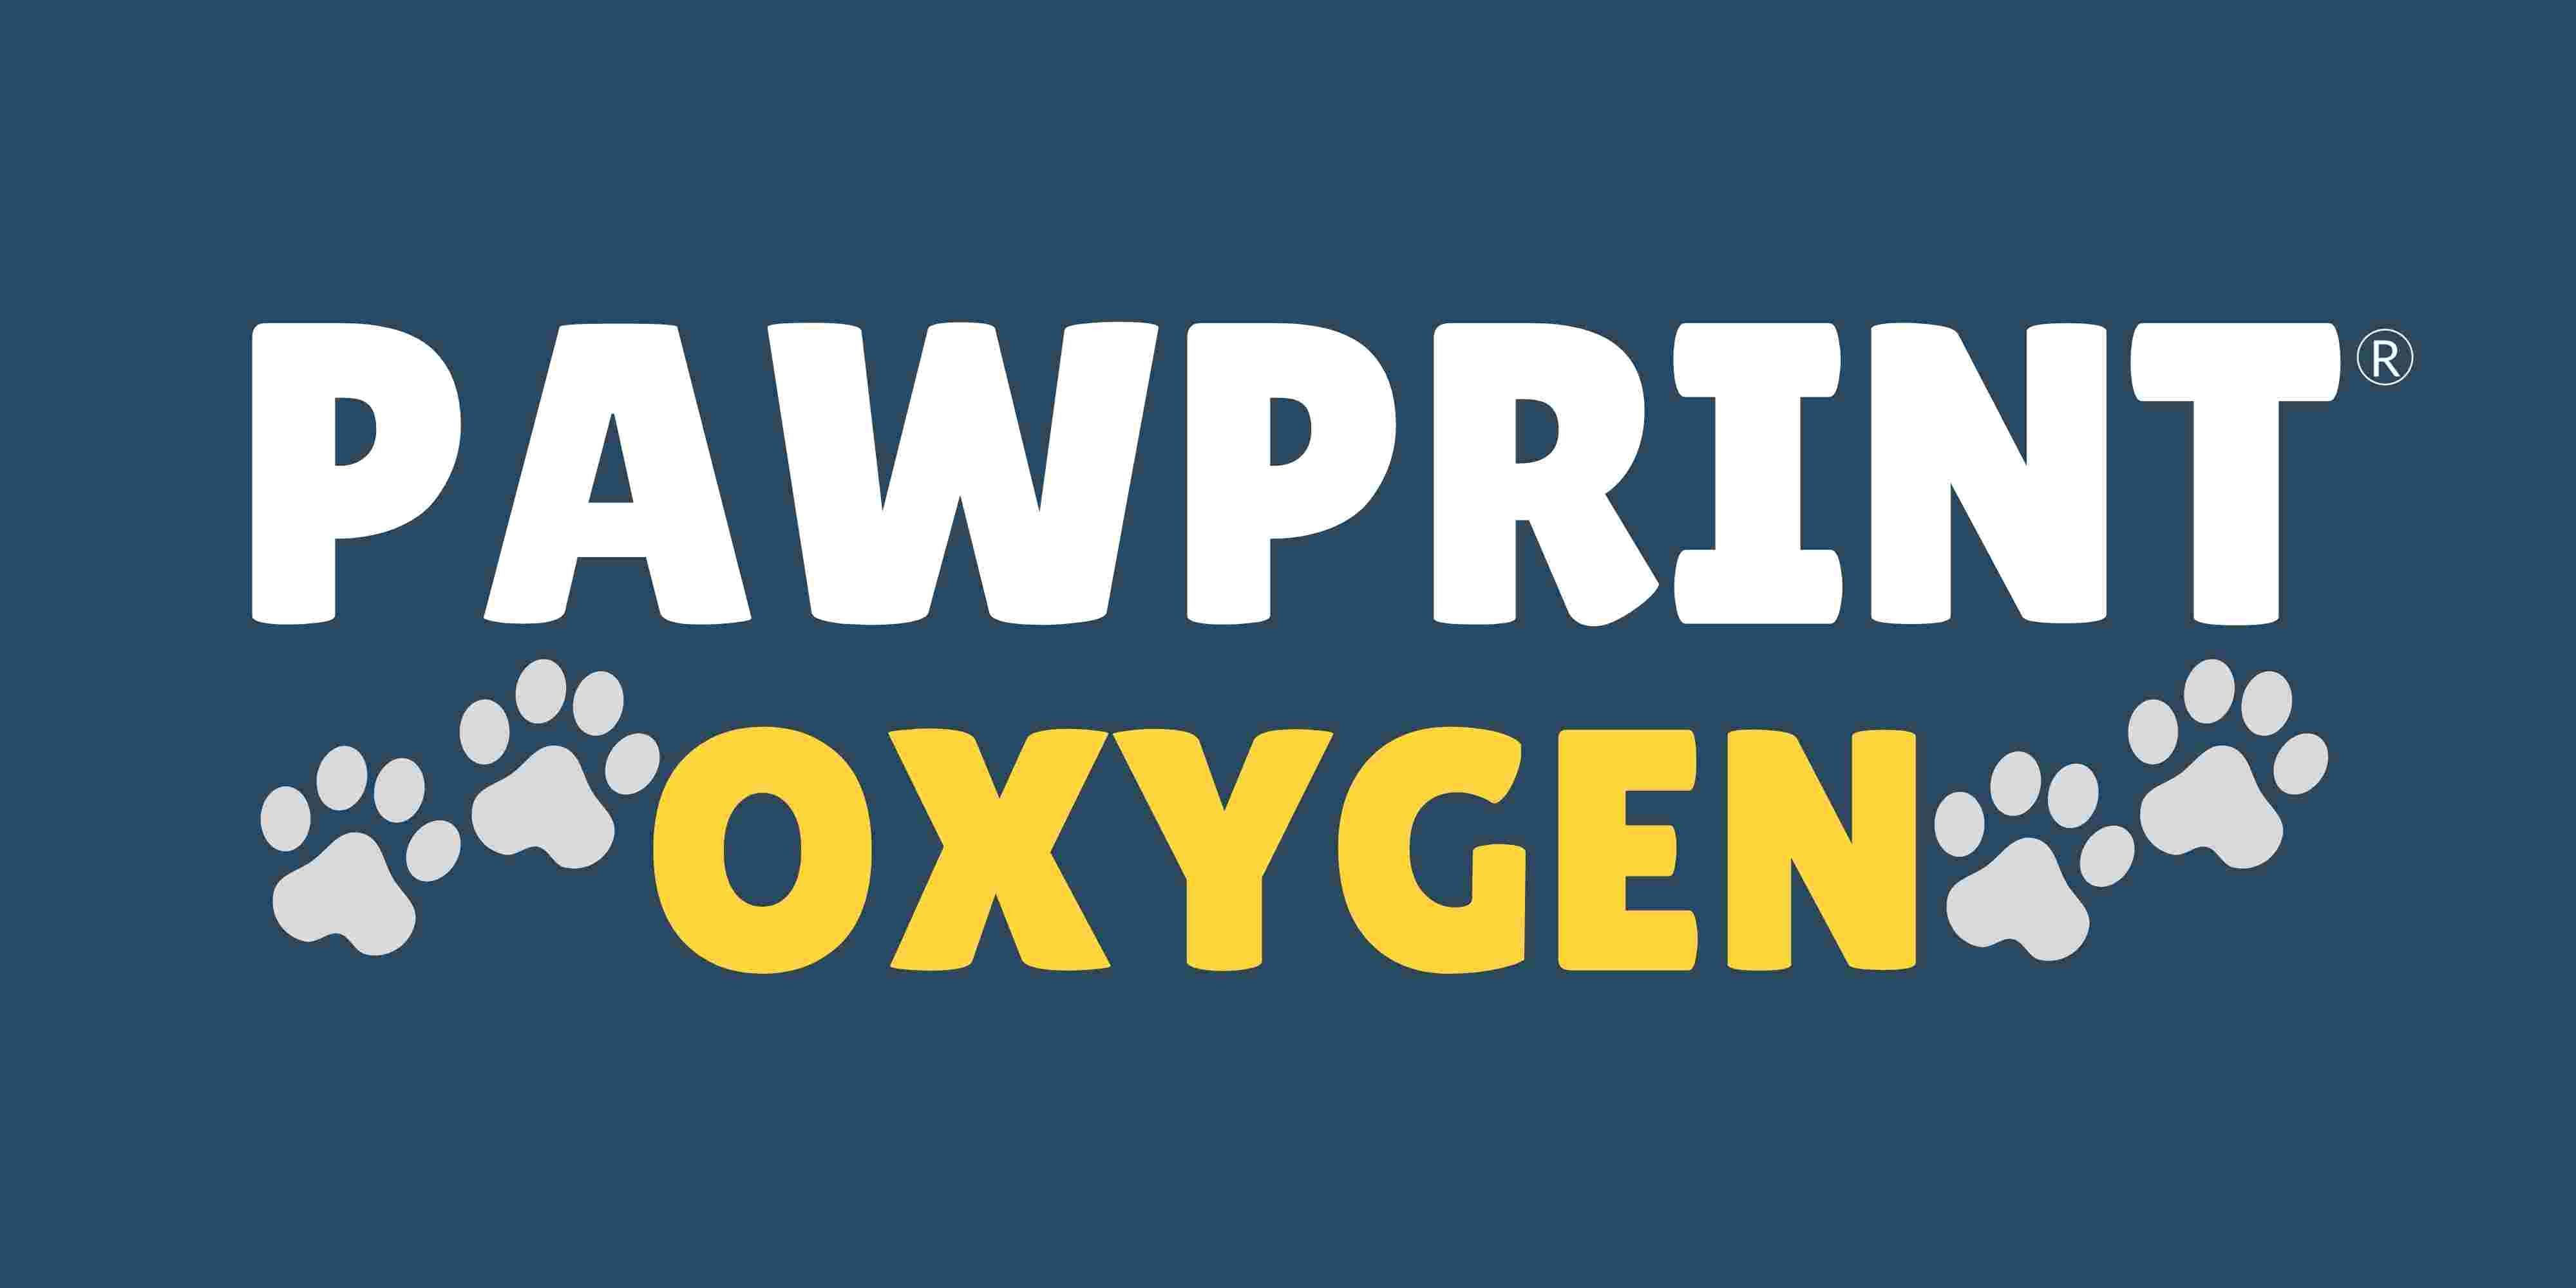 Pawprint Oxygen